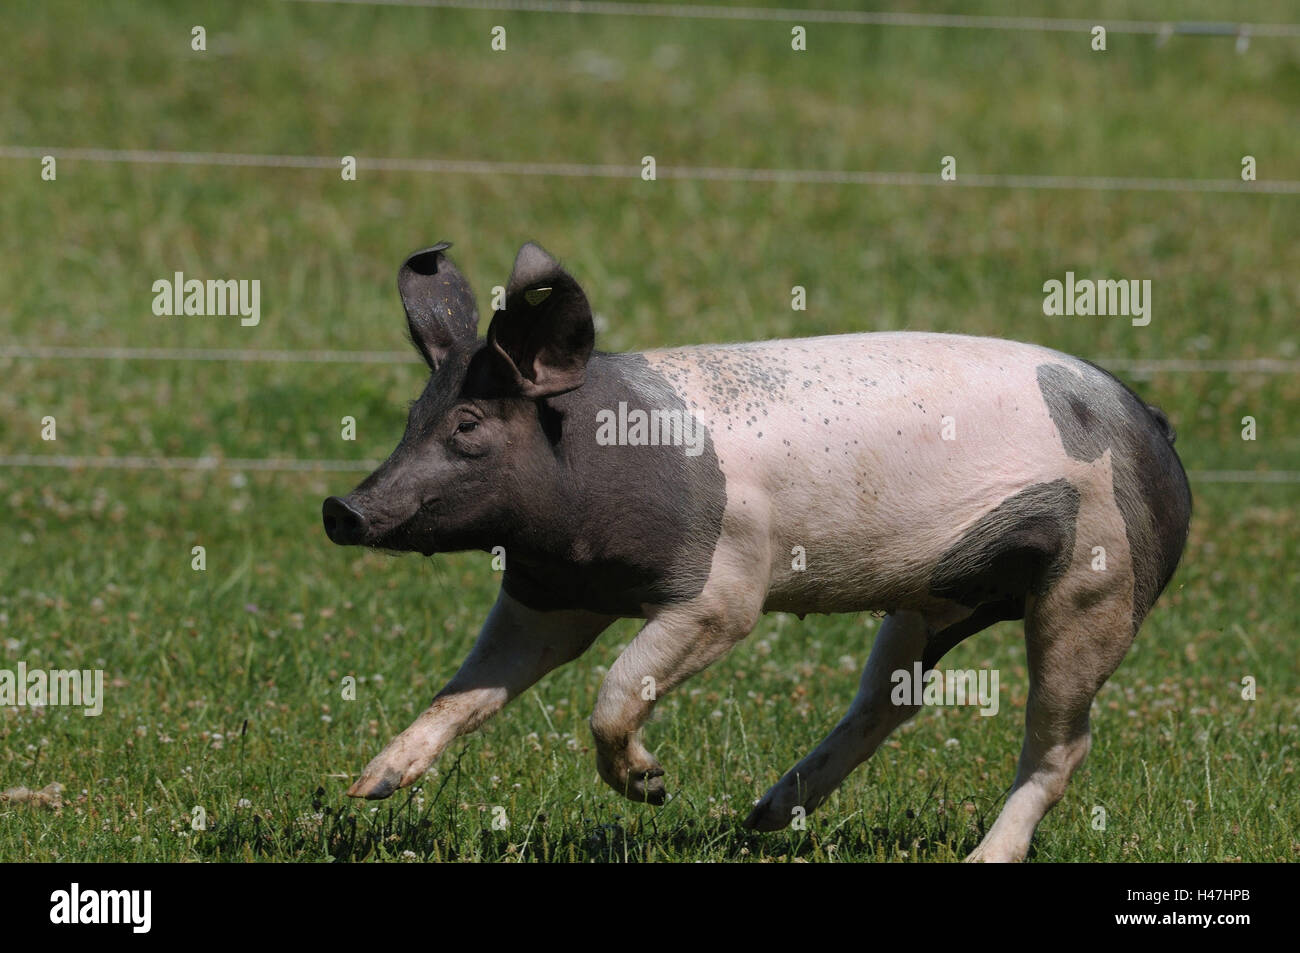 Swabian-Hall swine, meadow, side view, running, Stock Photo